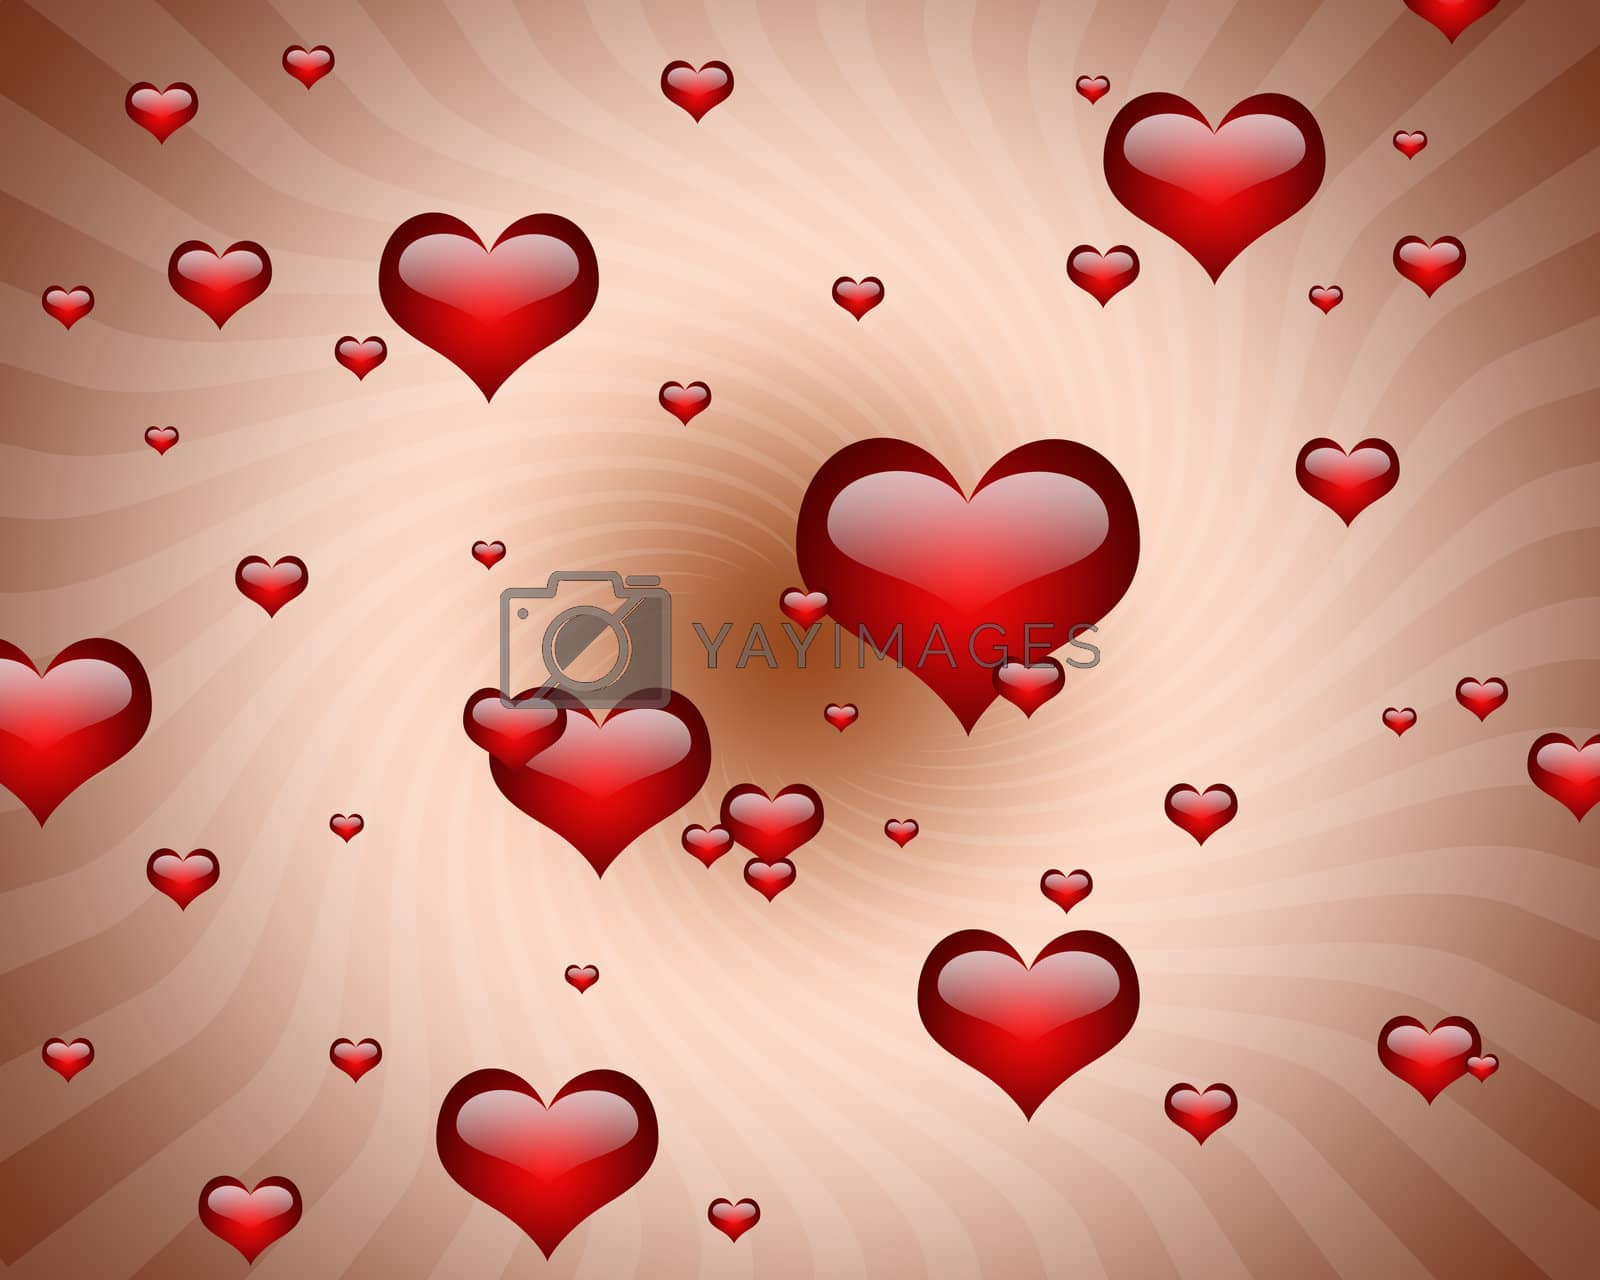 Royalty free image of Hearts by sacatani